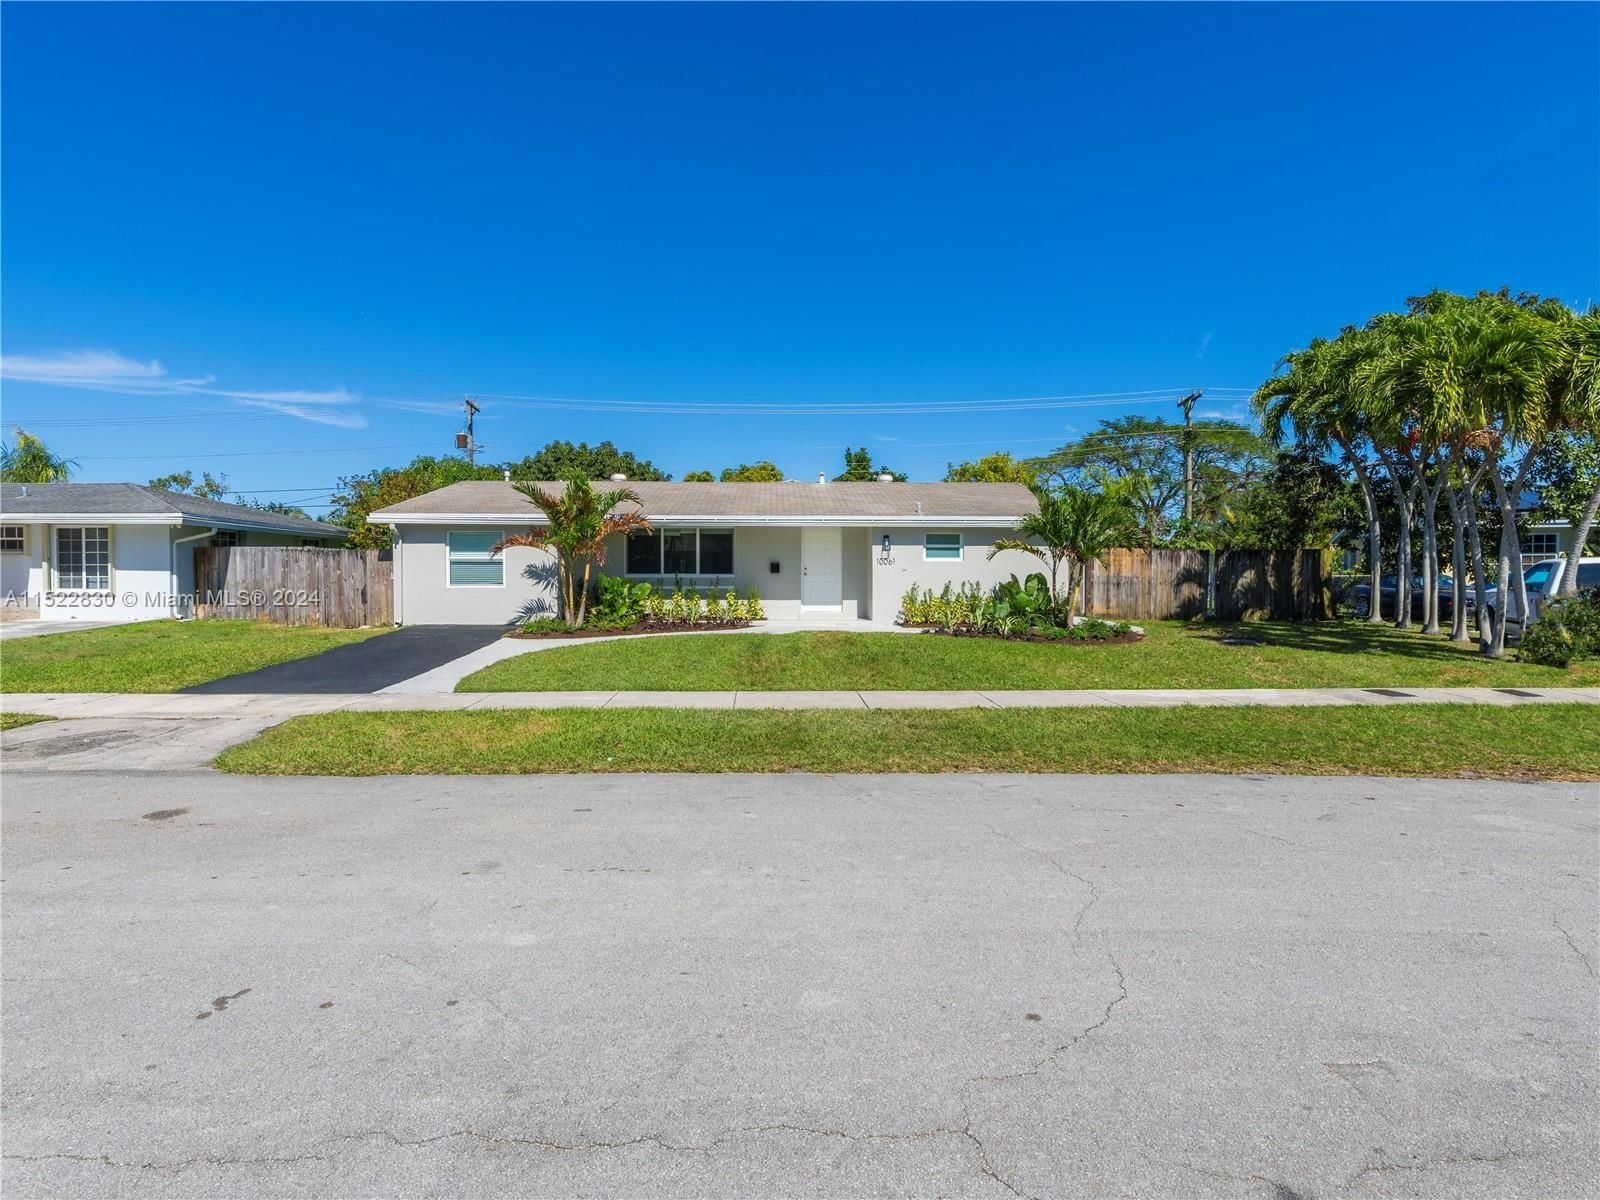 Real estate property located at 10061 158th Ter, Miami-Dade County, FAIRWAY PARK SEC 4, Miami, FL